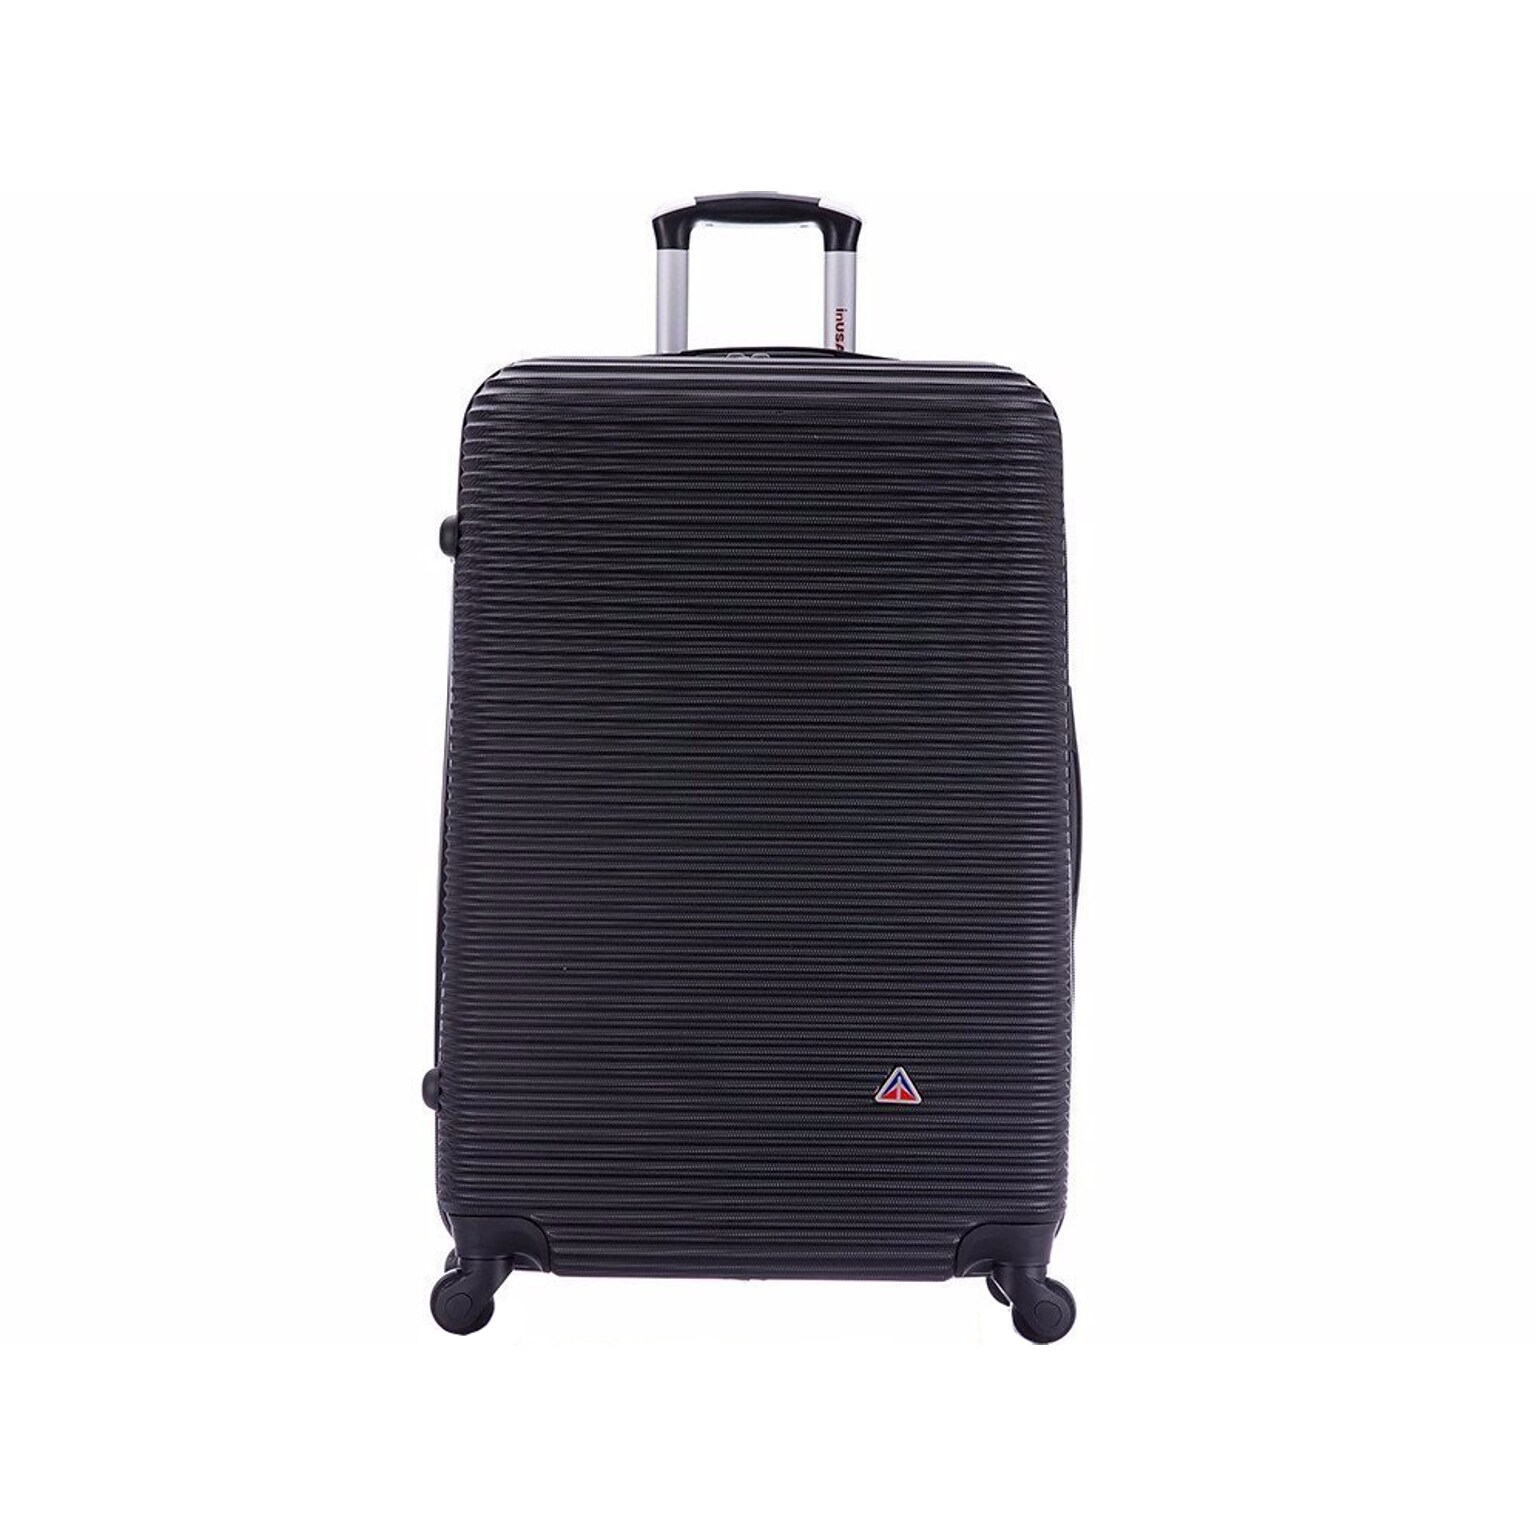 InUSA Royal 30 Hardside Suitcase, 4-Wheeled Spinner, Black (IUROY00L-BLK)